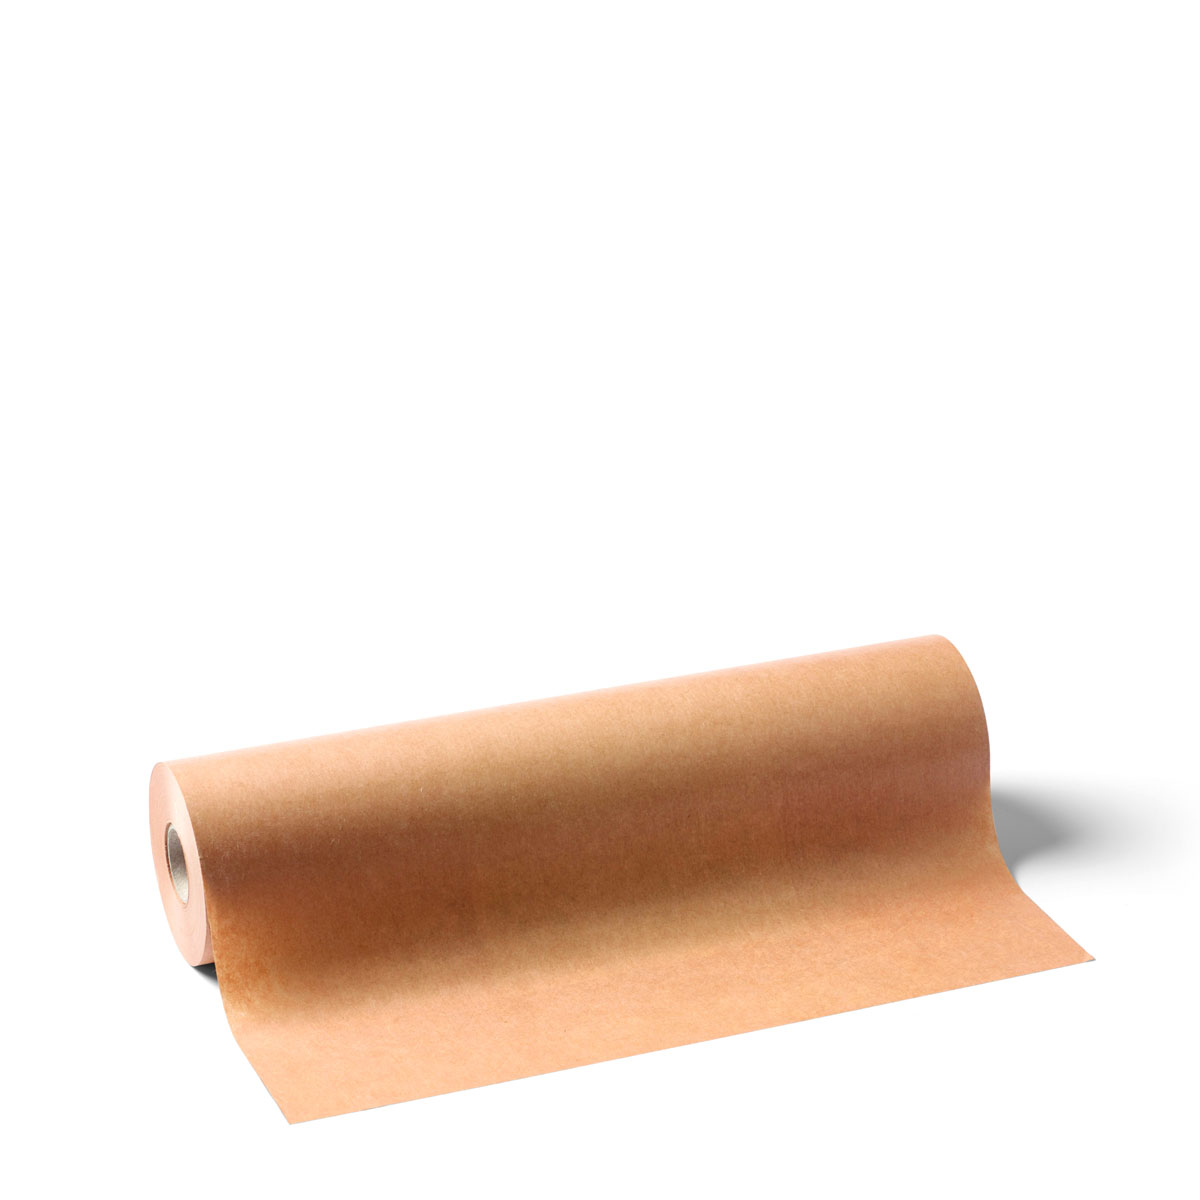 Schuller selbstklebendes Abdeckpapier 300mmx50m Paper Protect #46005